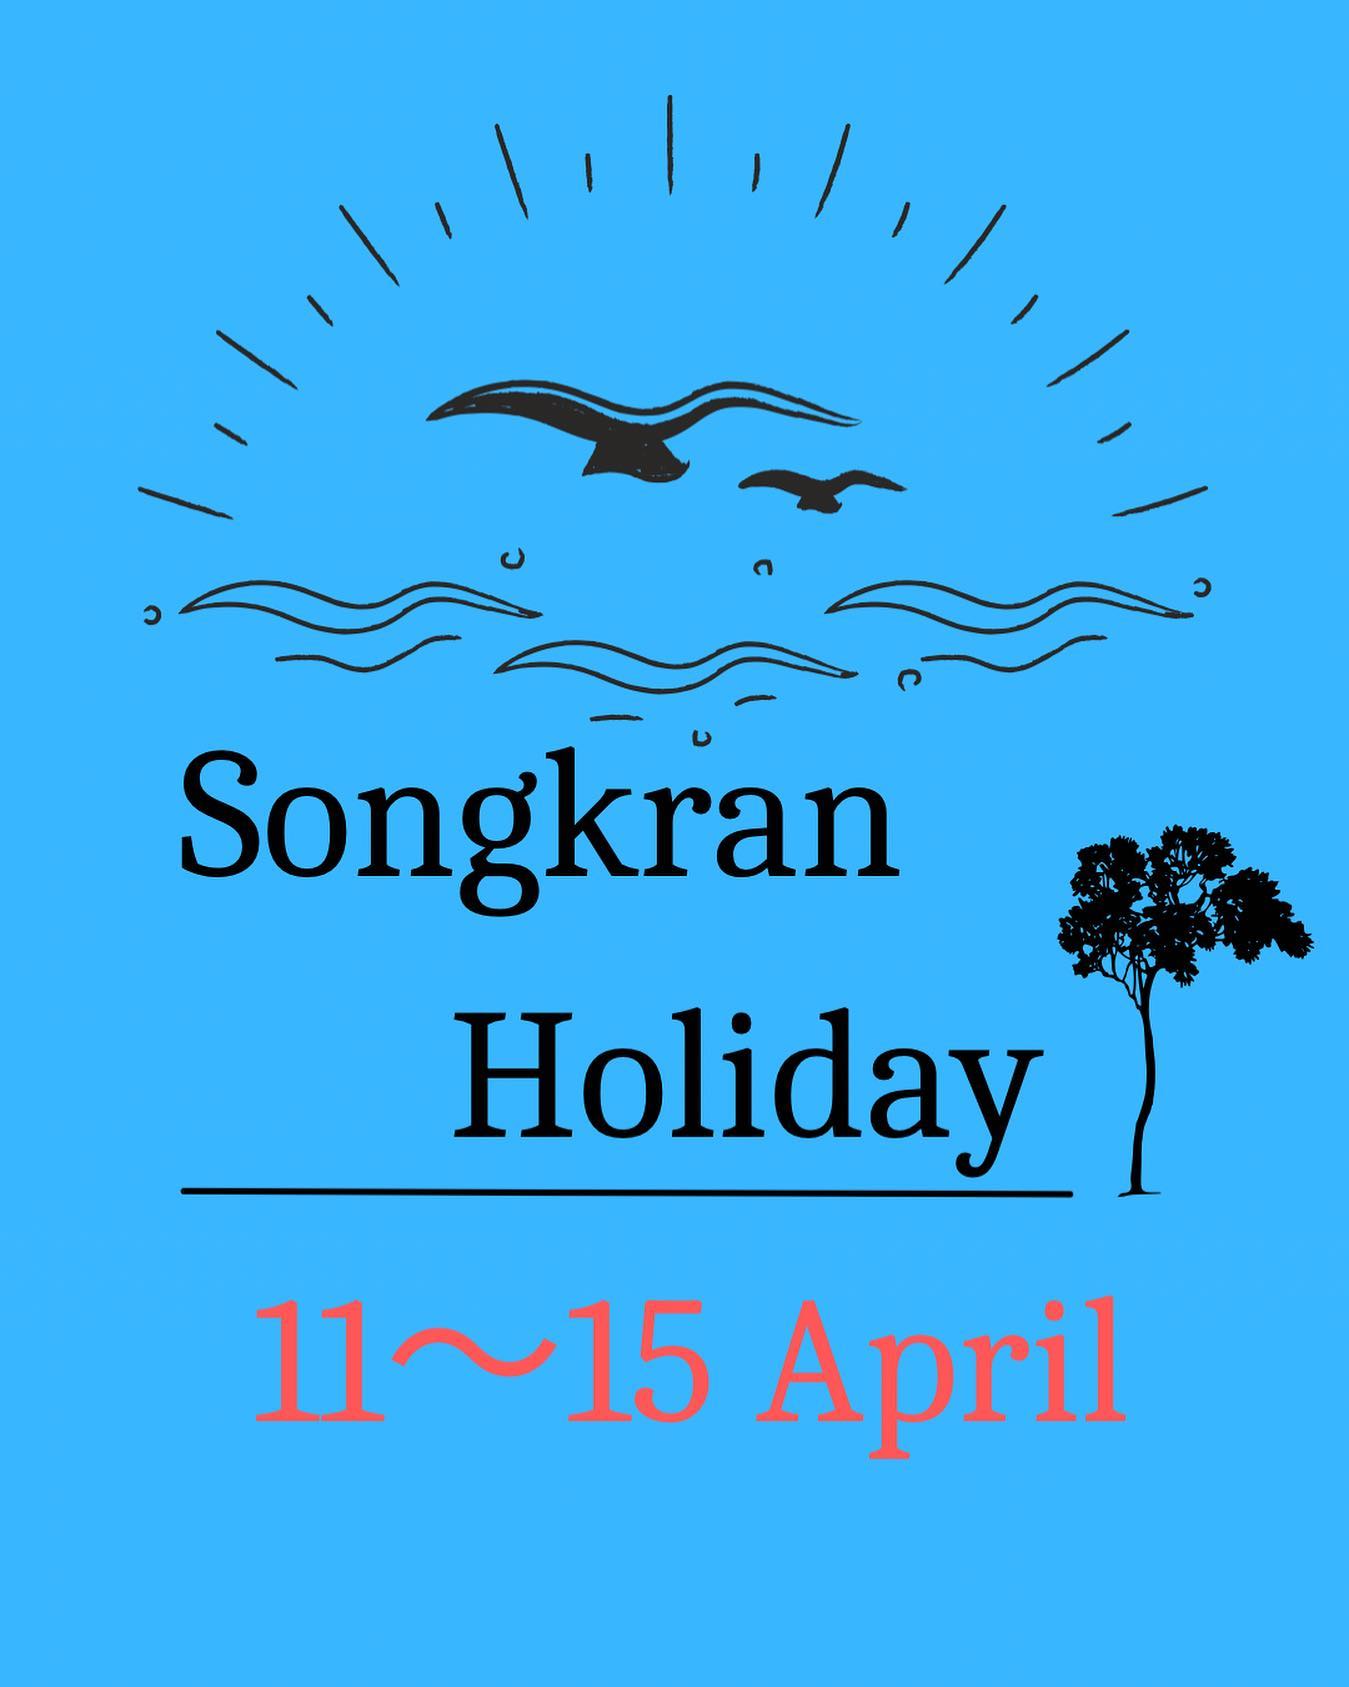 Songkran holidays  Songkran will be closed from 11 to 15 th. Please use this LINE for reservations and consultations.
…………………………
ร้าน Hair Room Sora 299/7 ชั้น1, Sukhumvit Living Town, ซอยสุขุมวิท21(อโศก)
️ 02-169-1622
 Line : @575zzlqc (มี @)
️** บัตรเครดิตขั้นต่ำ 2000 บาท **
#Hairroomsora #Hairroomsorabangkok #🤖 #Hairstyle #Sukhumvitlivingtown #sukhumvit21 #Japanesesalon #DigitalPerm #デジパ #ヘアールームソラ #fashioncolor #ร้านซาลอนญี่ปุ่น #ซาลอน #ทำผมรับปริญญา #ทำผมออกงาน #รับทำผม #ดัดดิจิตอล #ยืดผม #ย้อมผม #Repost